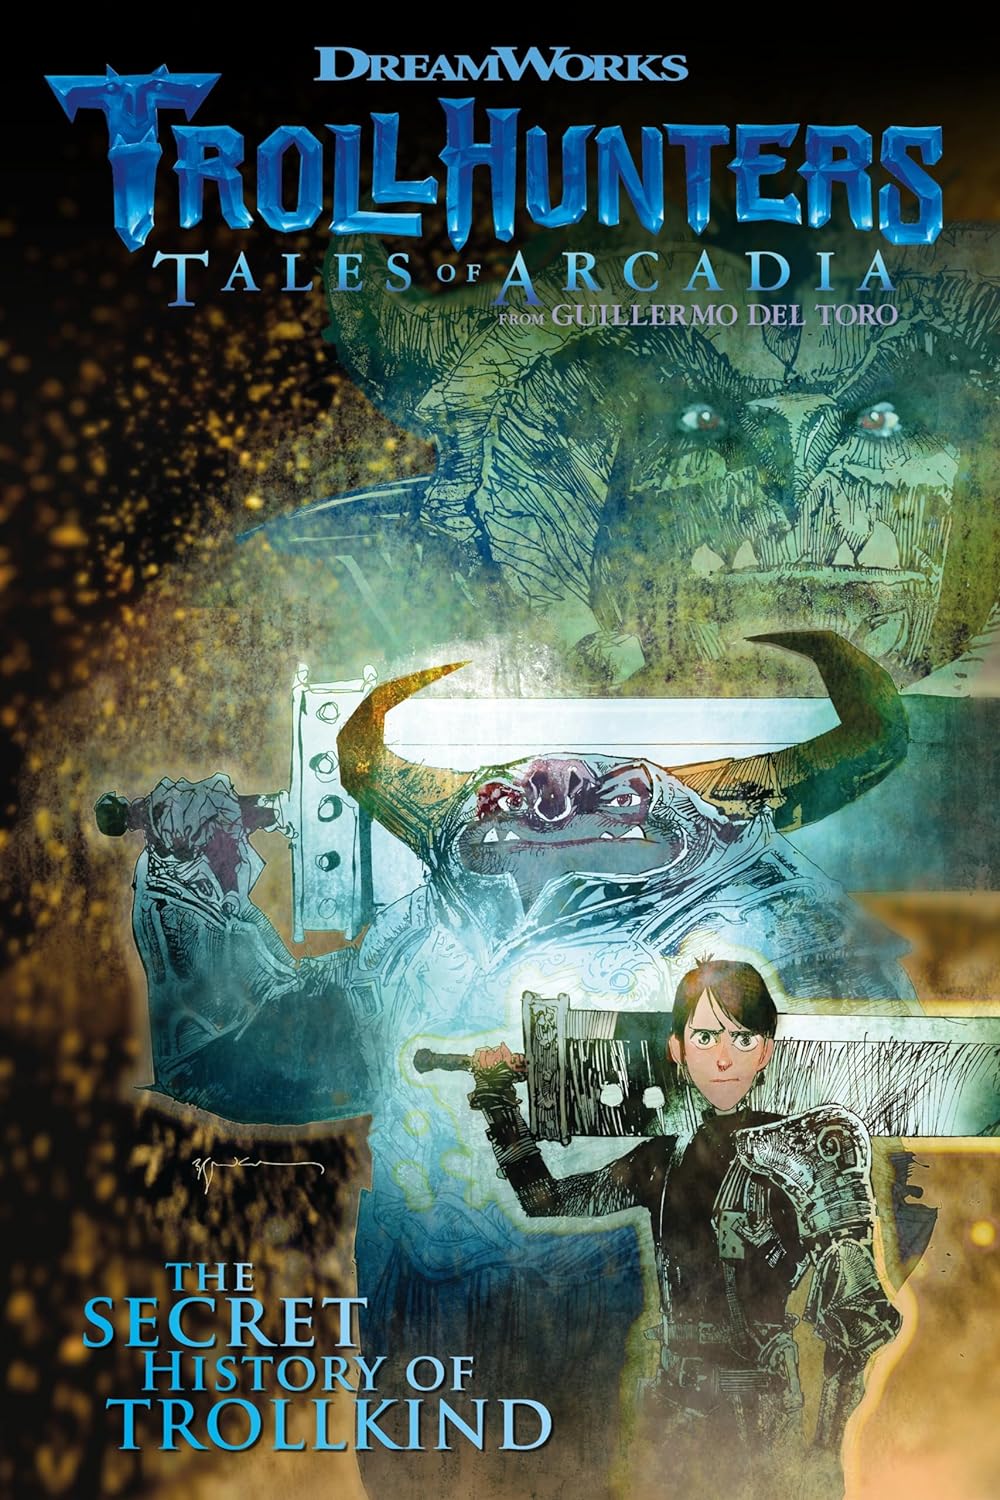 Trollhunters Tales of Arcadia The Secret of Trollkind TPB